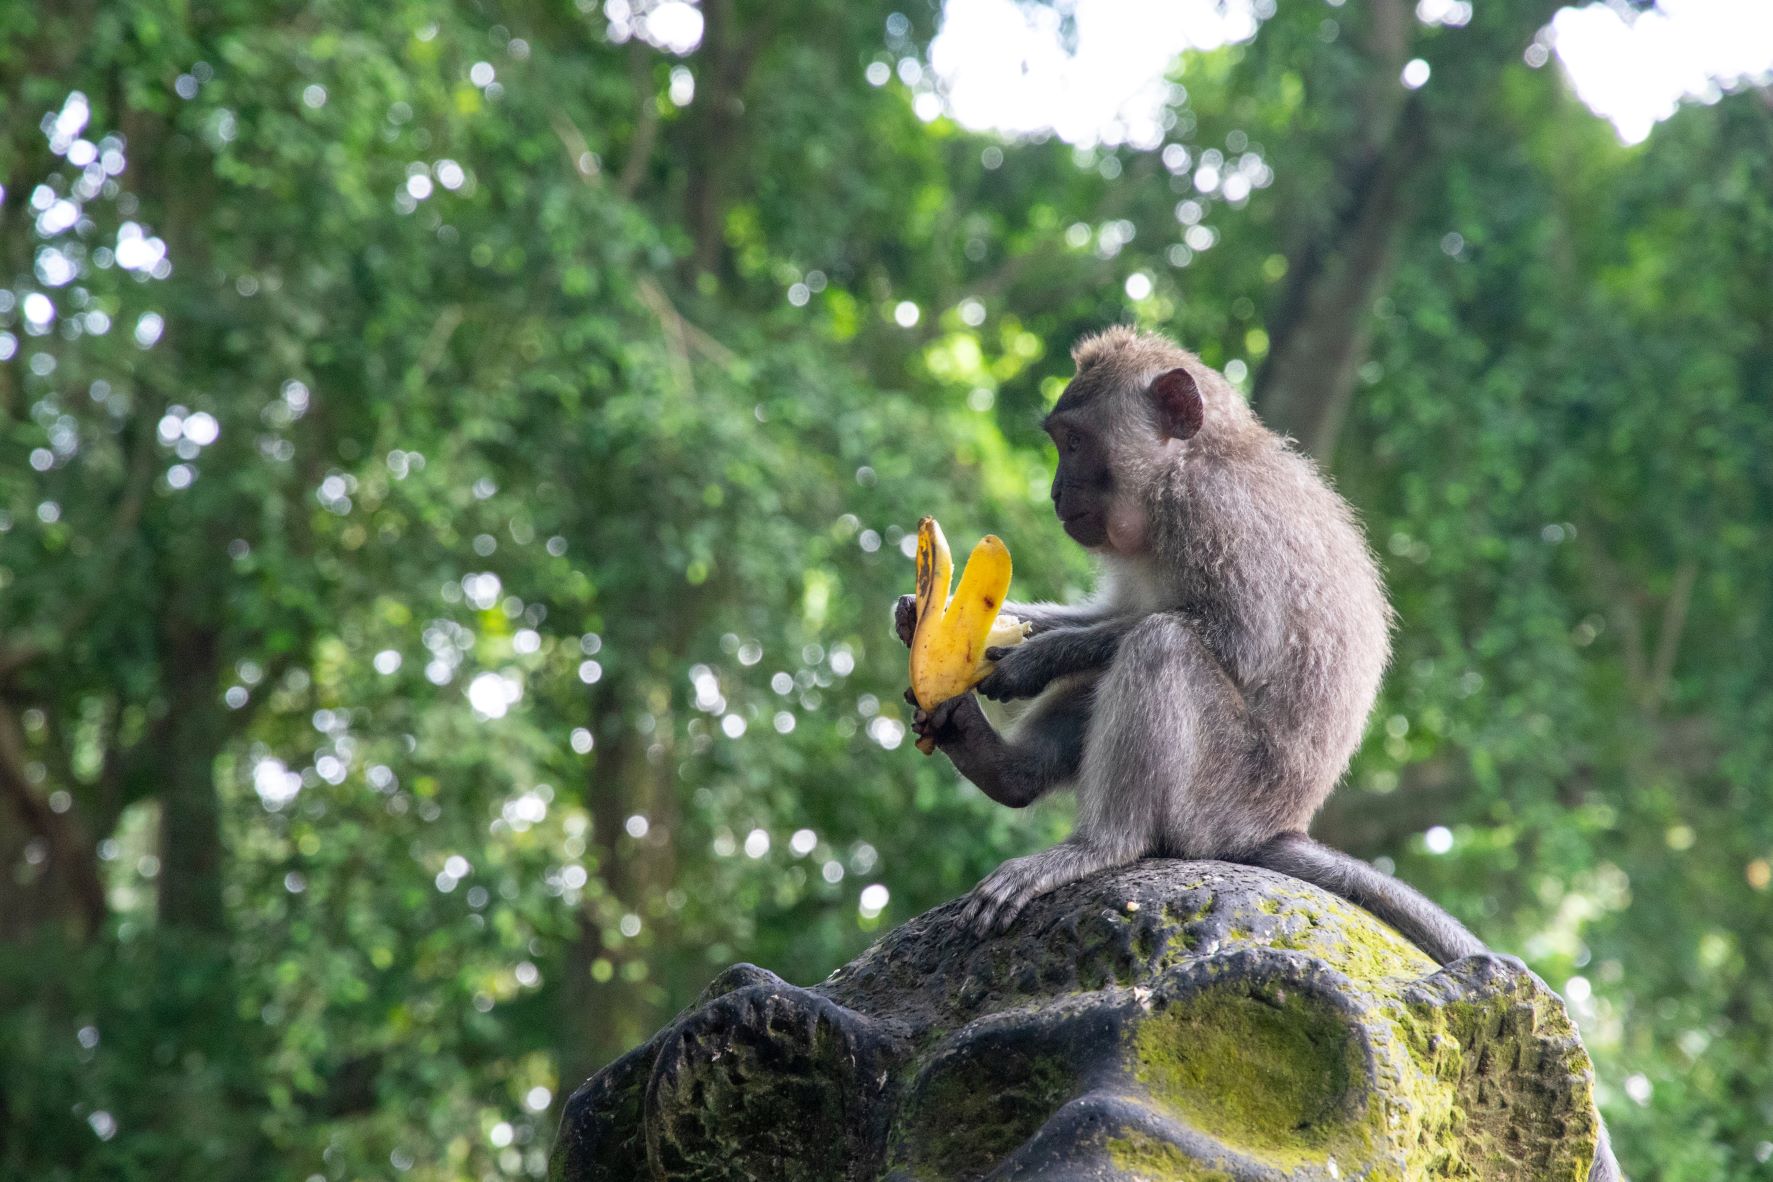 Monkey Eating Banana - Photo by Robin Canfield on Unsplash